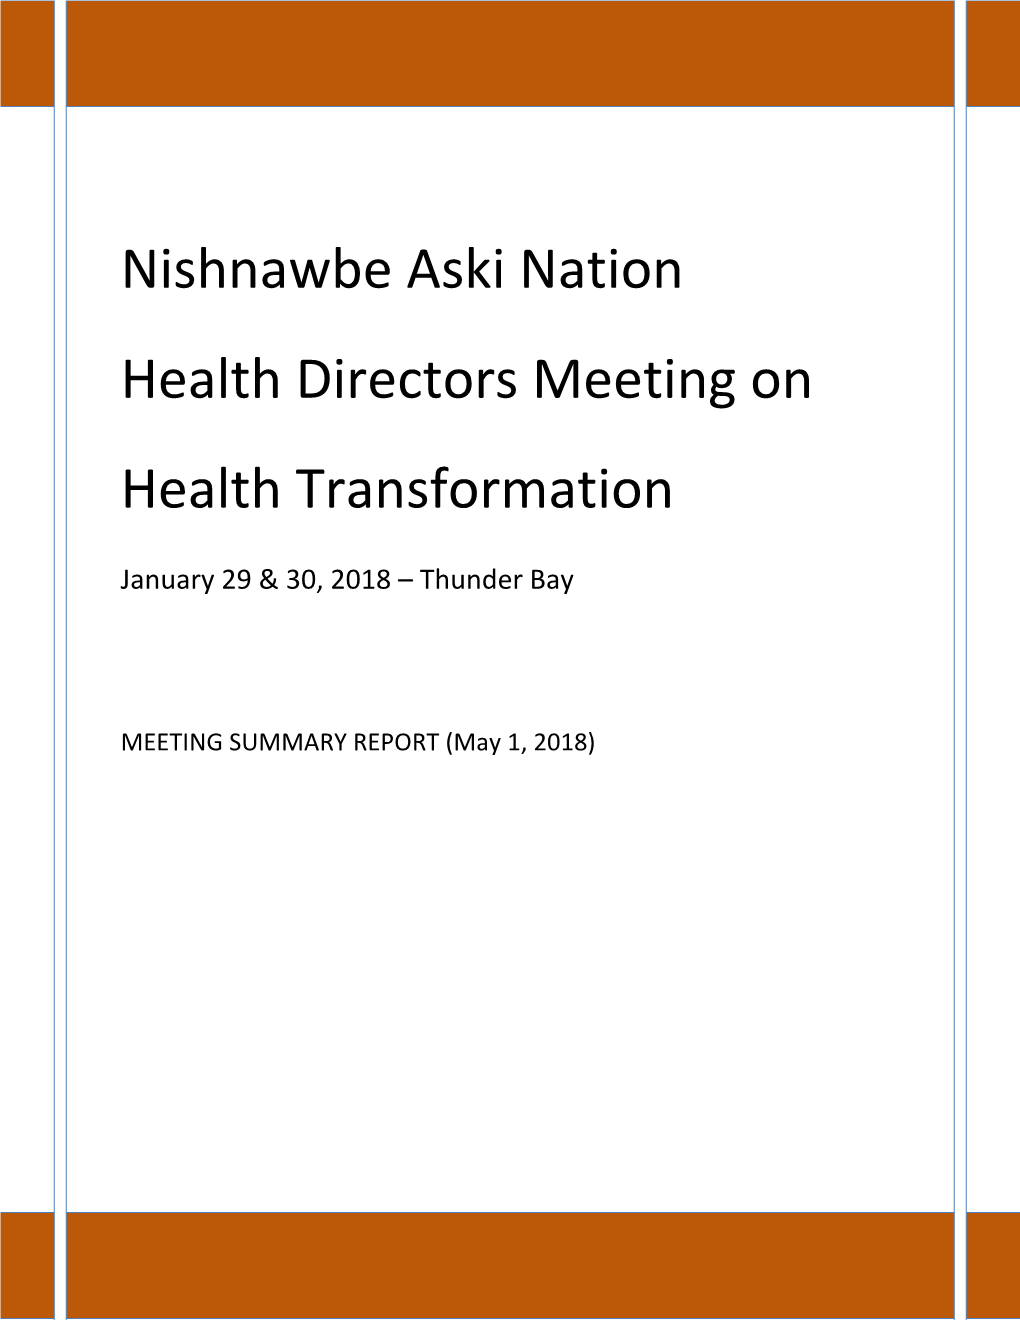 Nishnawbe Aski Nation Health Directors Meeting on Health Transformation